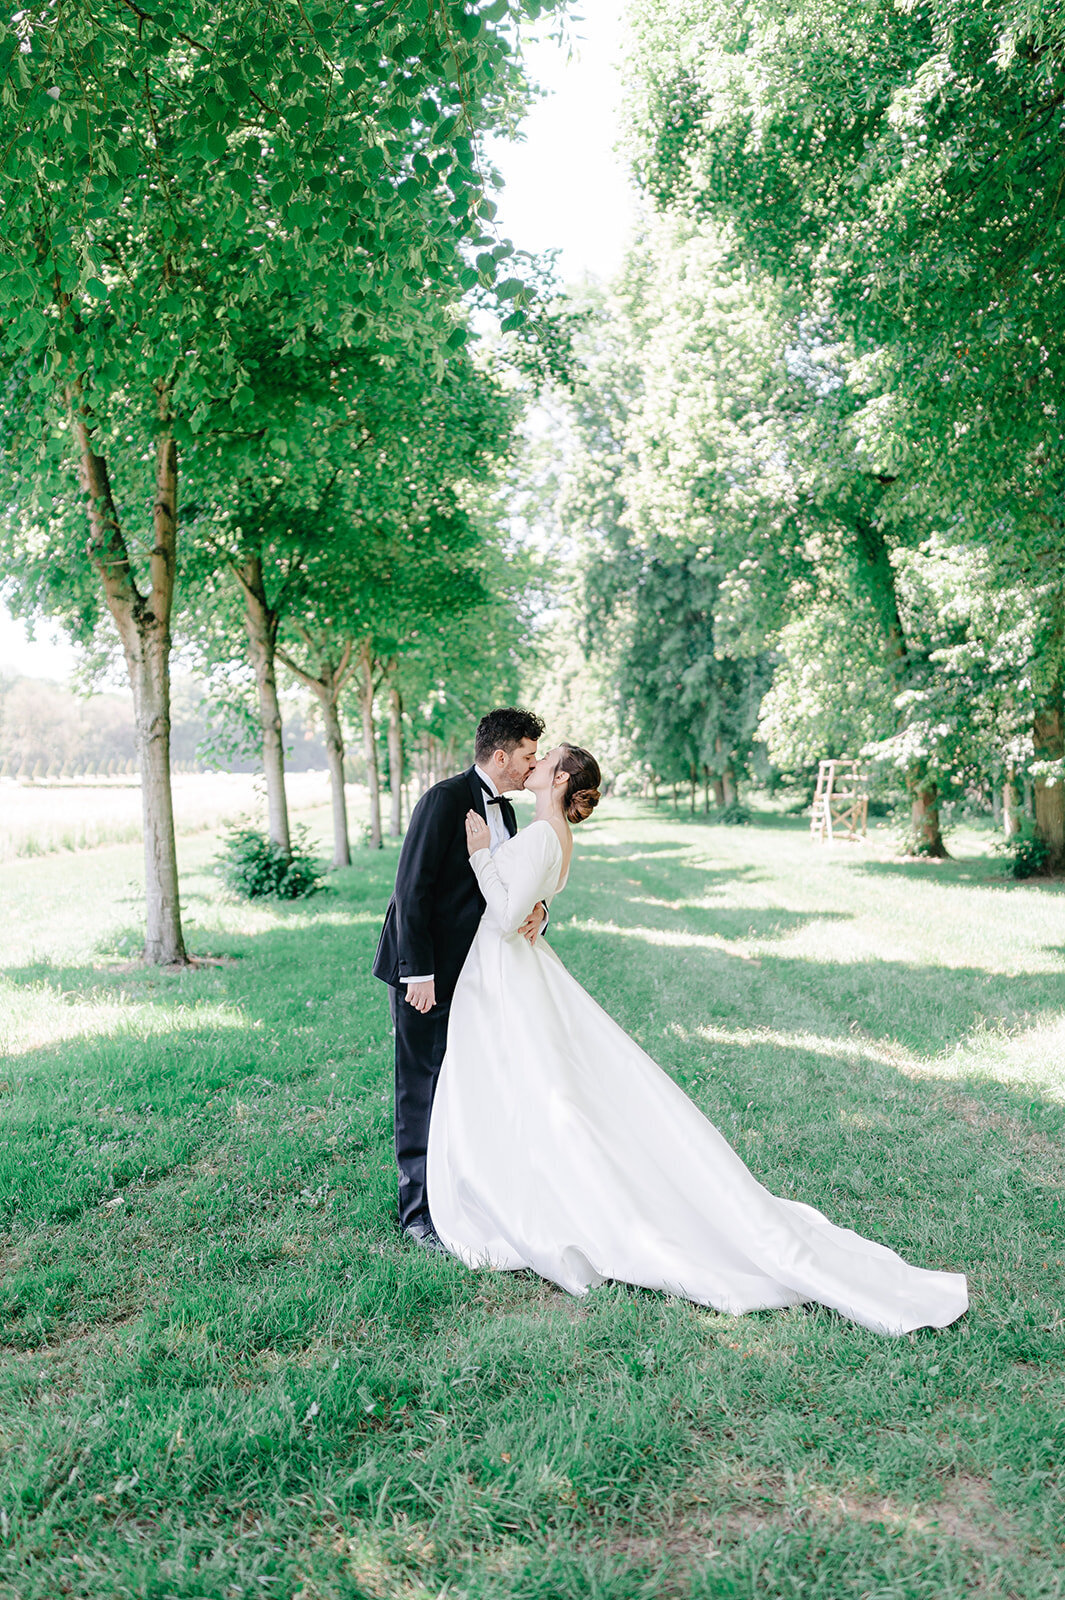 MorganeBallPhotography-WEDDING-ElizabethPhil-02-Weddingday-05-photosession-135-4713